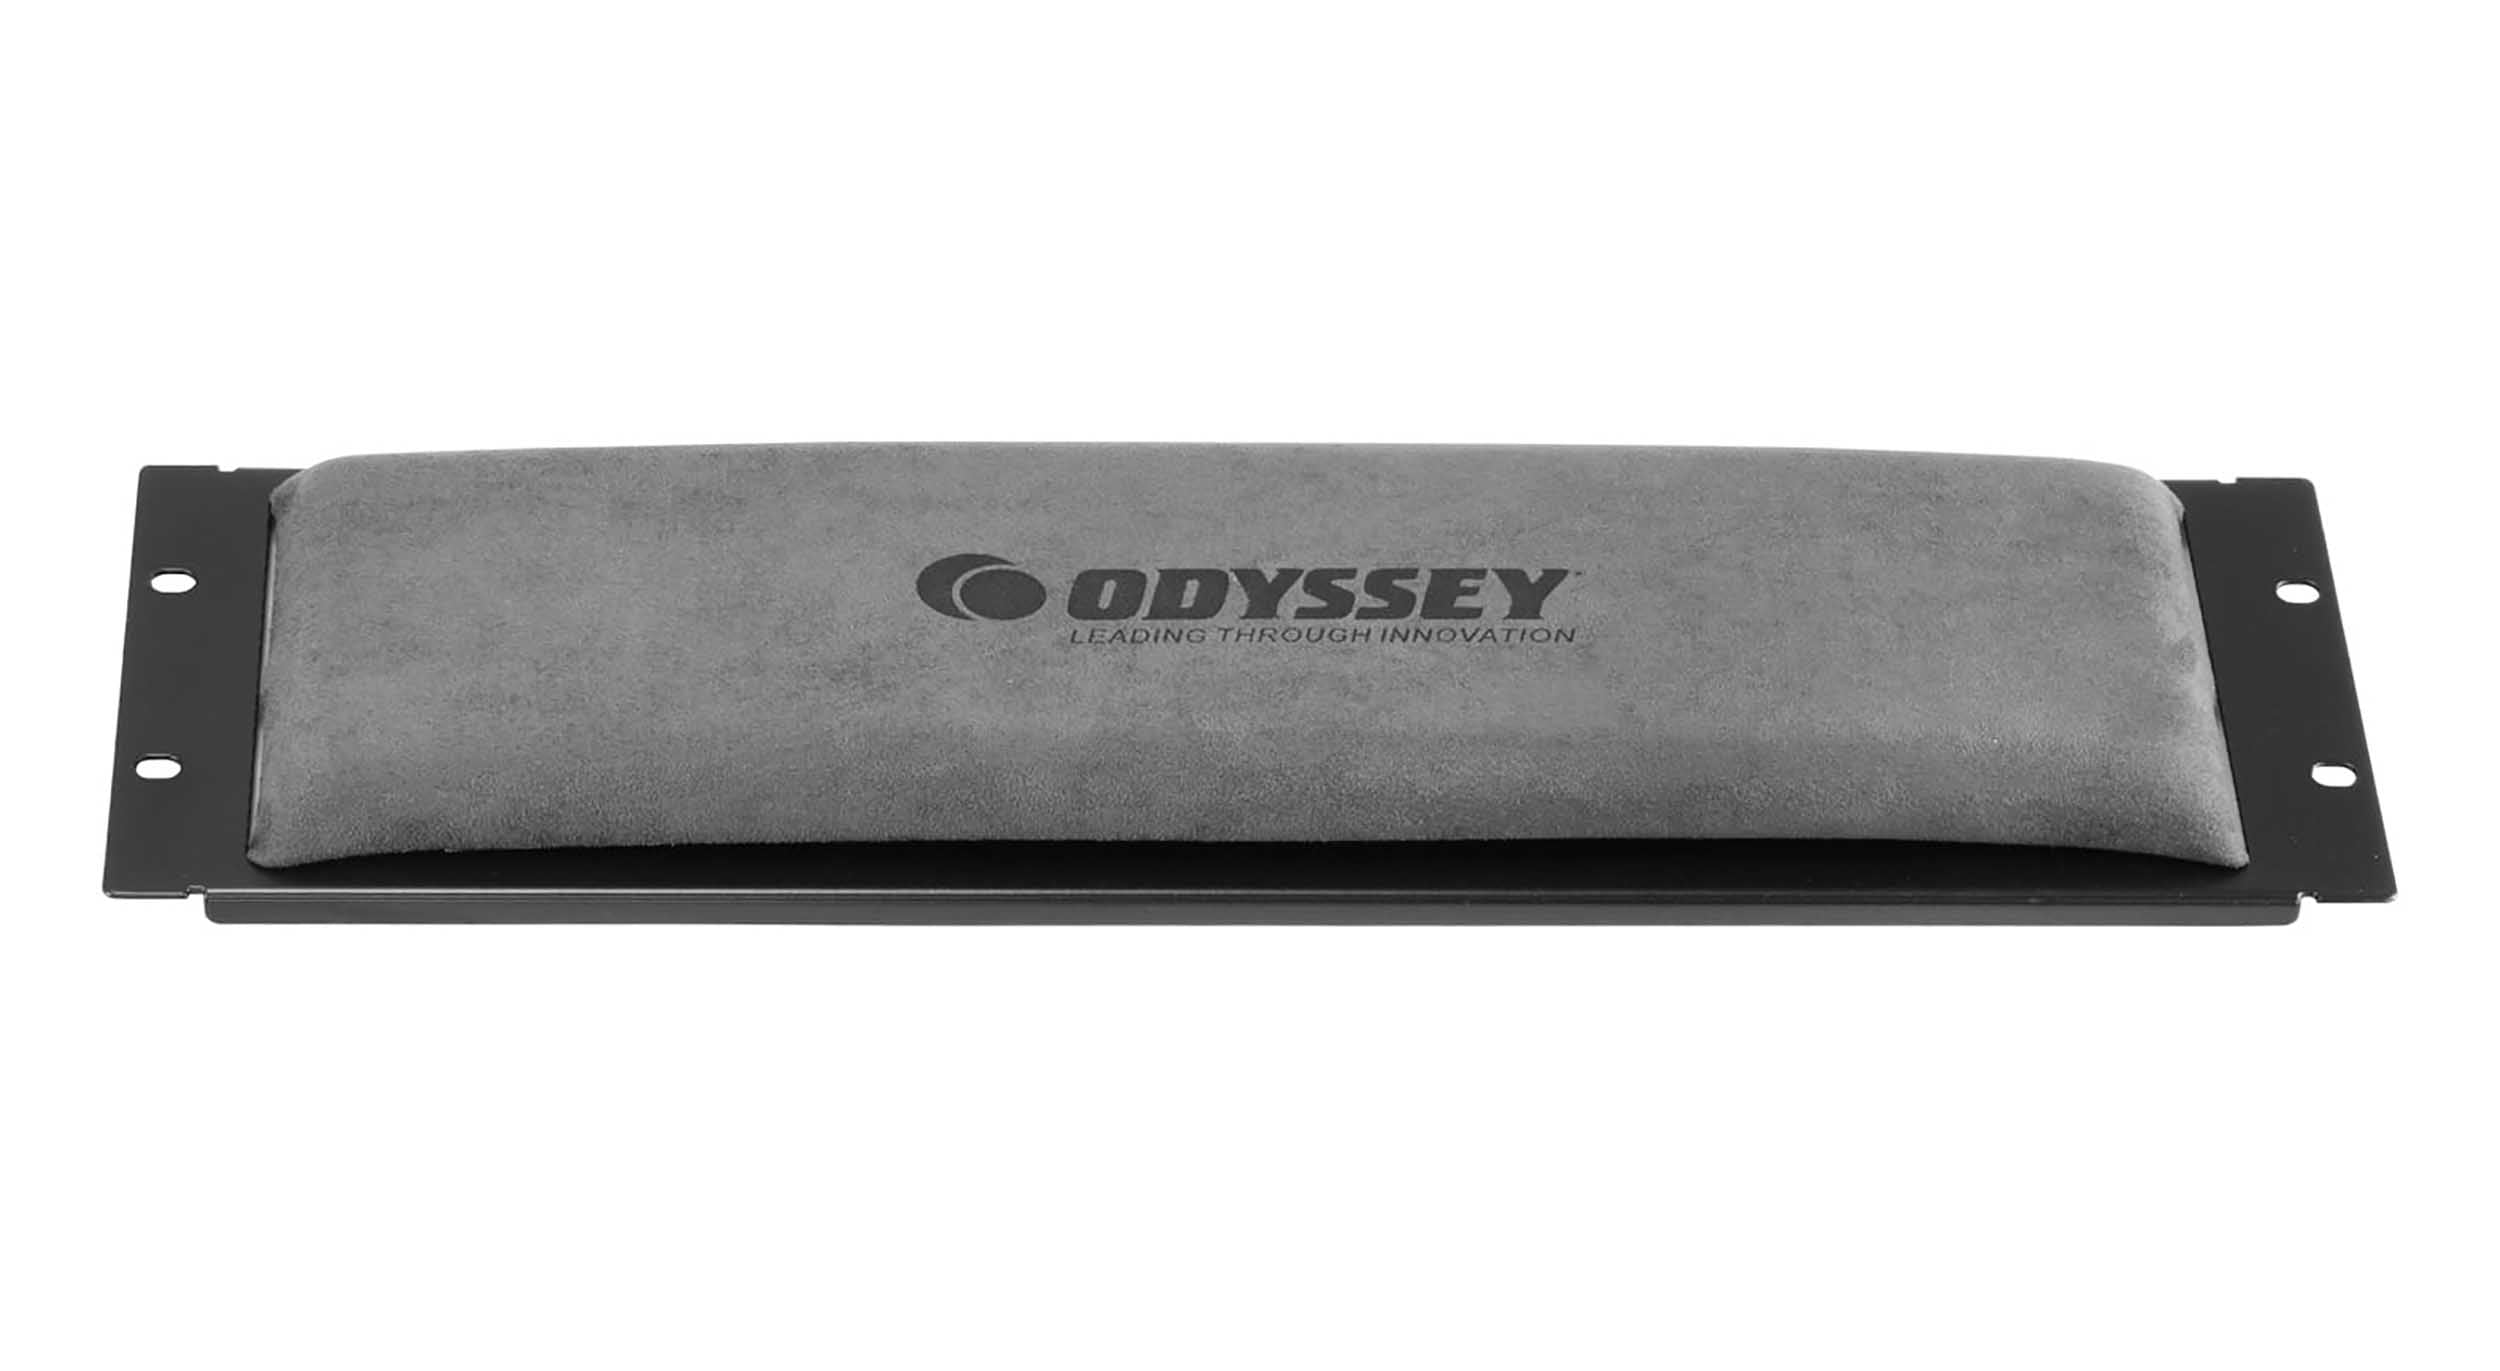 Odyssey ARWRISTCOMFORT3U Comfort Wrist Rest Pad for Rack Cases - 3U Tall by Odyssey